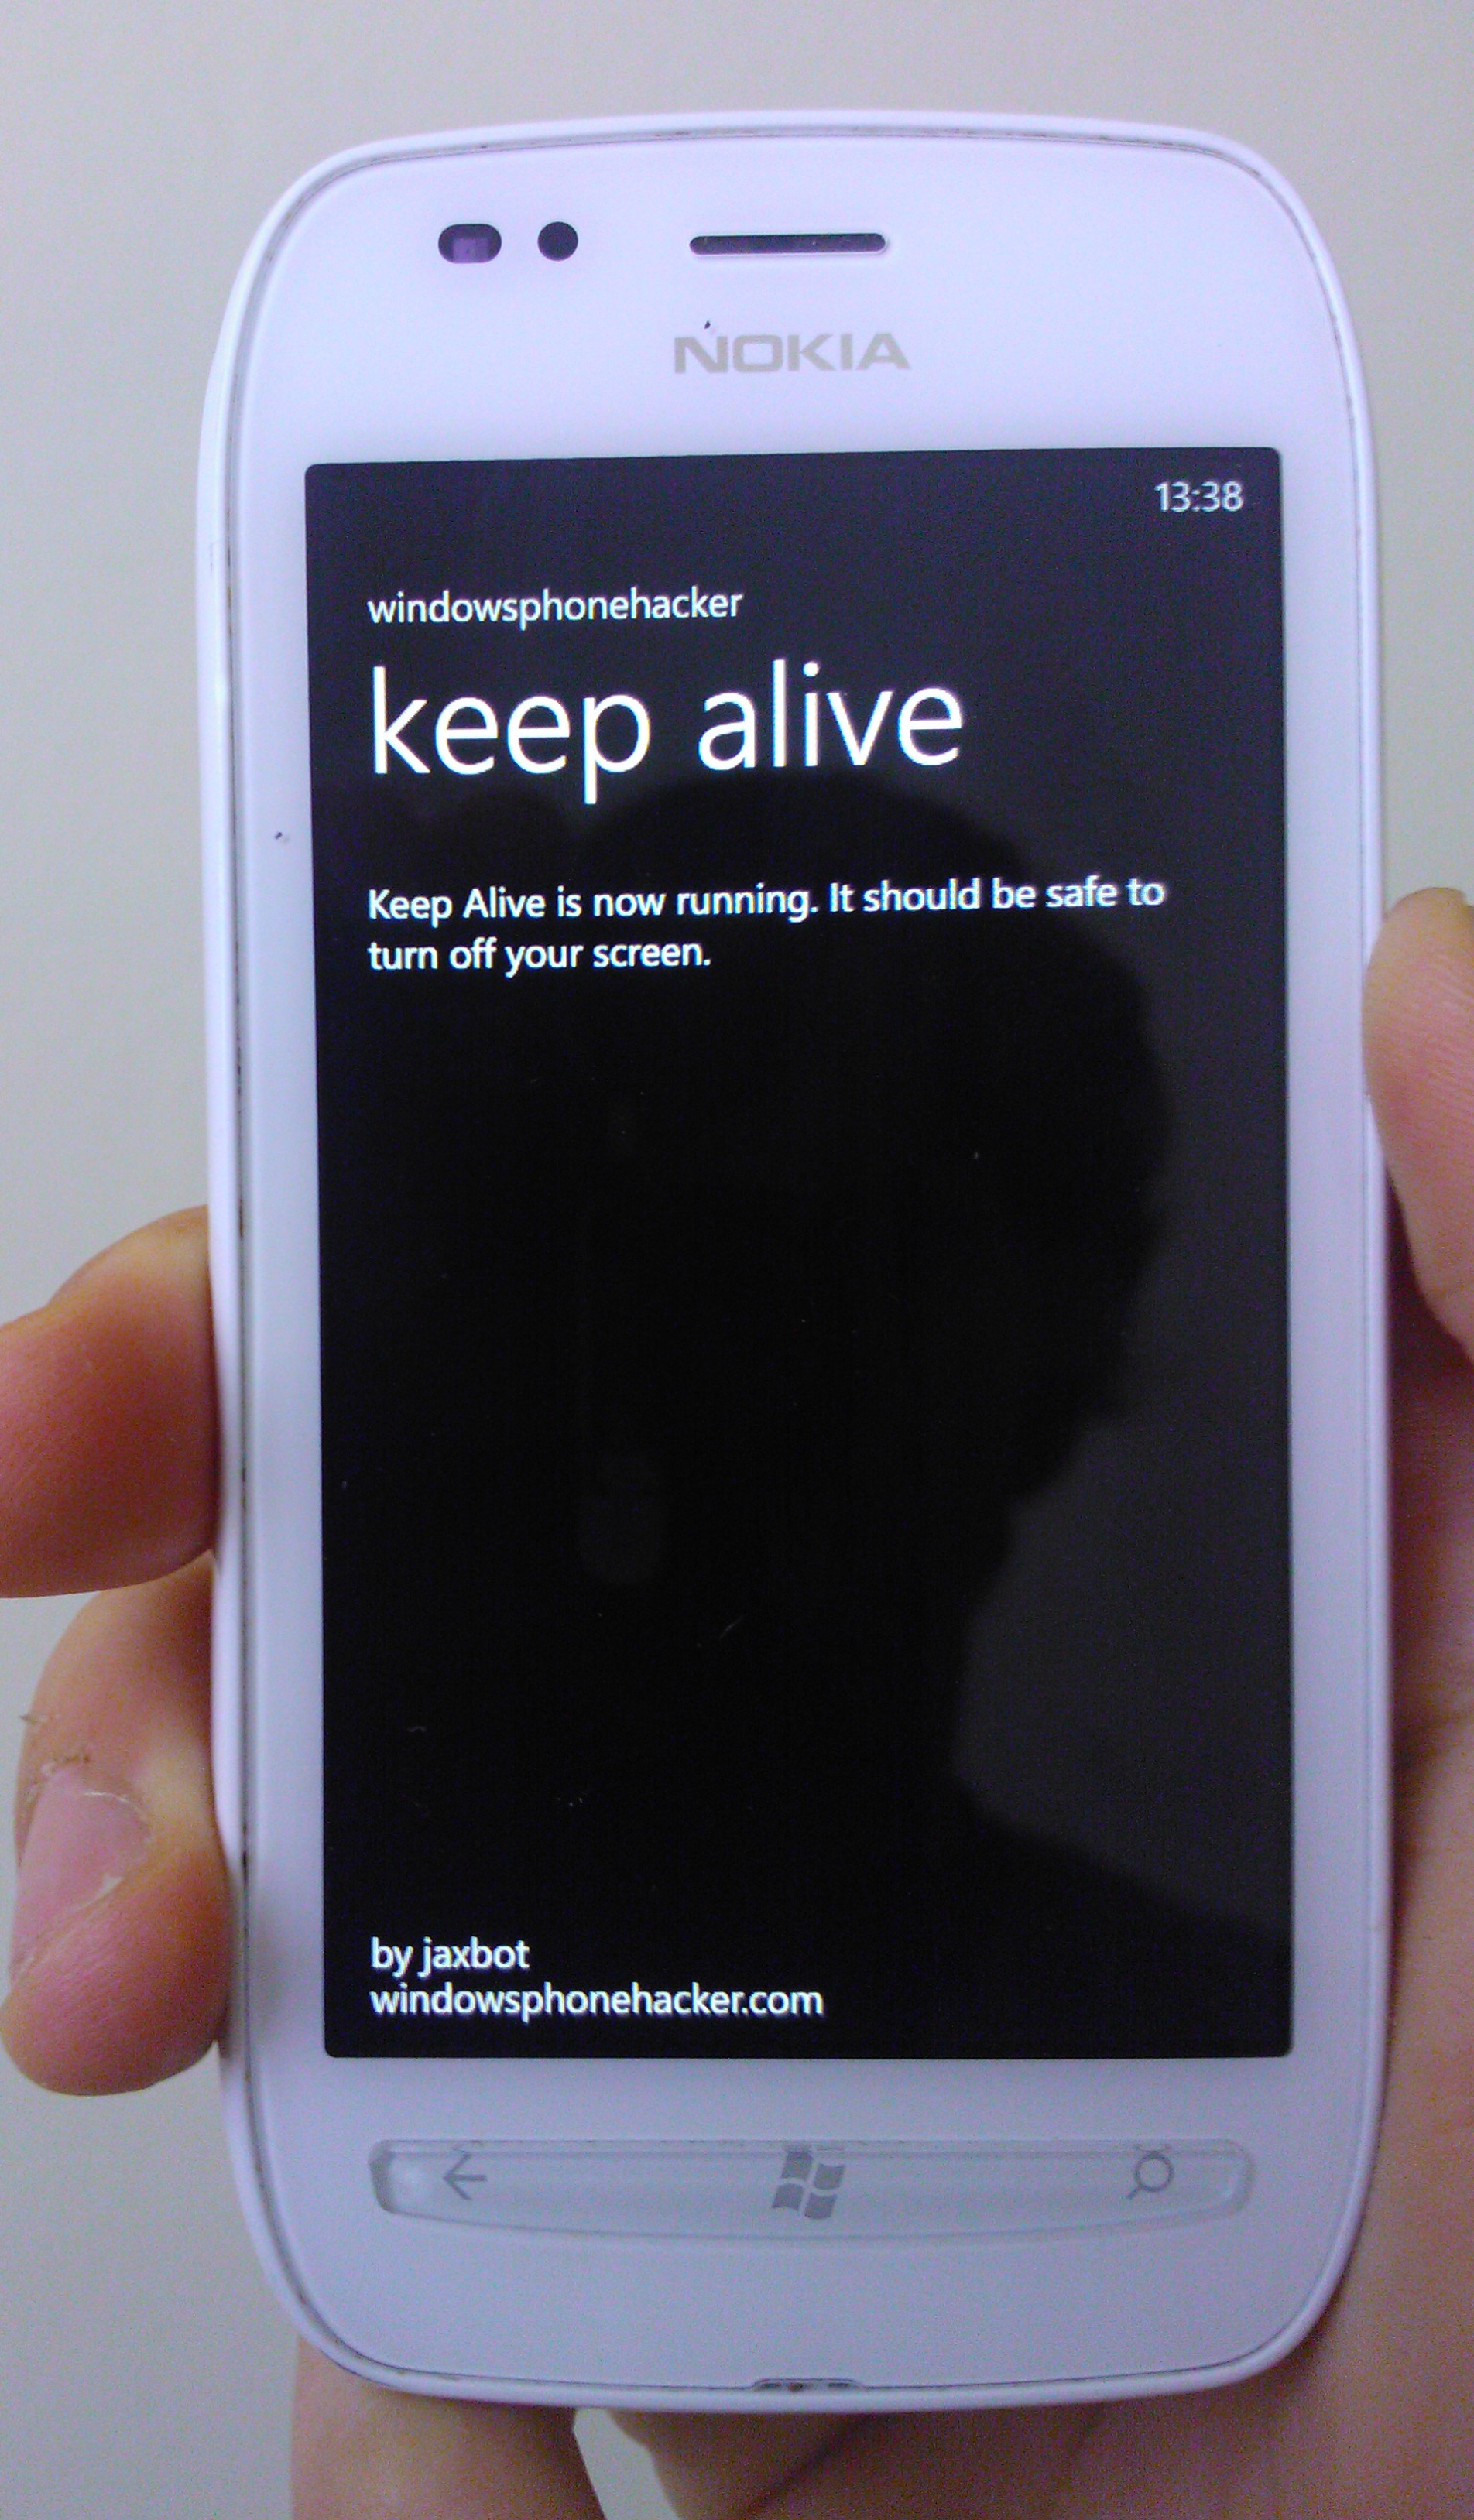 Keep Alive